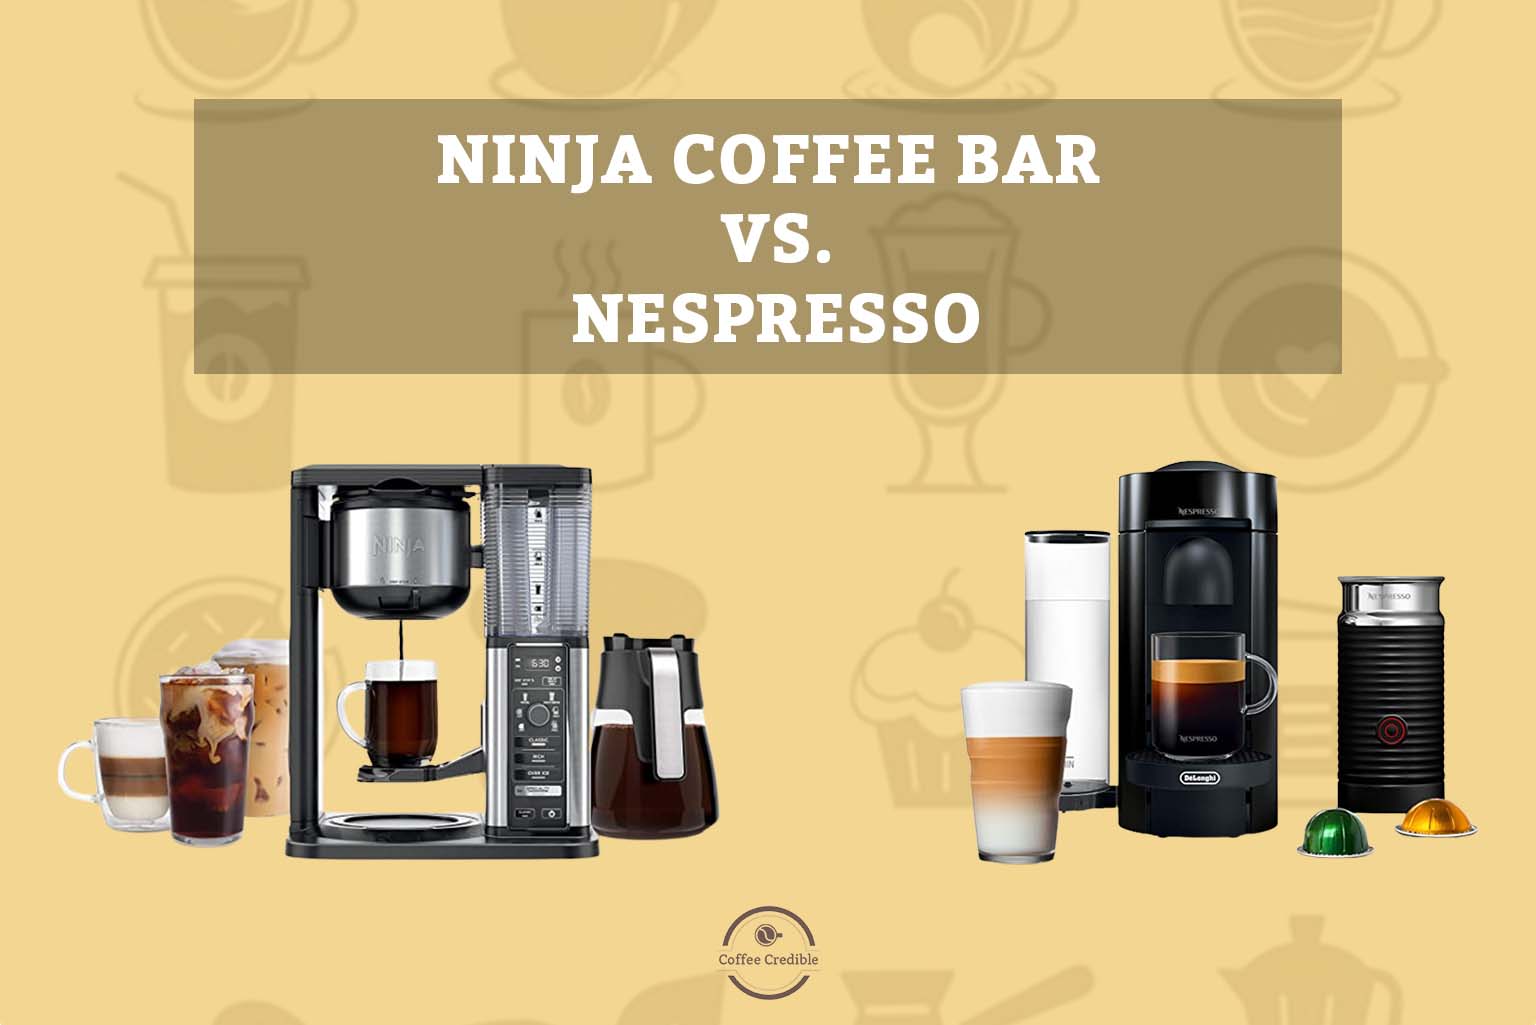 Ninja Coffee Bar Vs. Nespresso, Who Is The Winner?